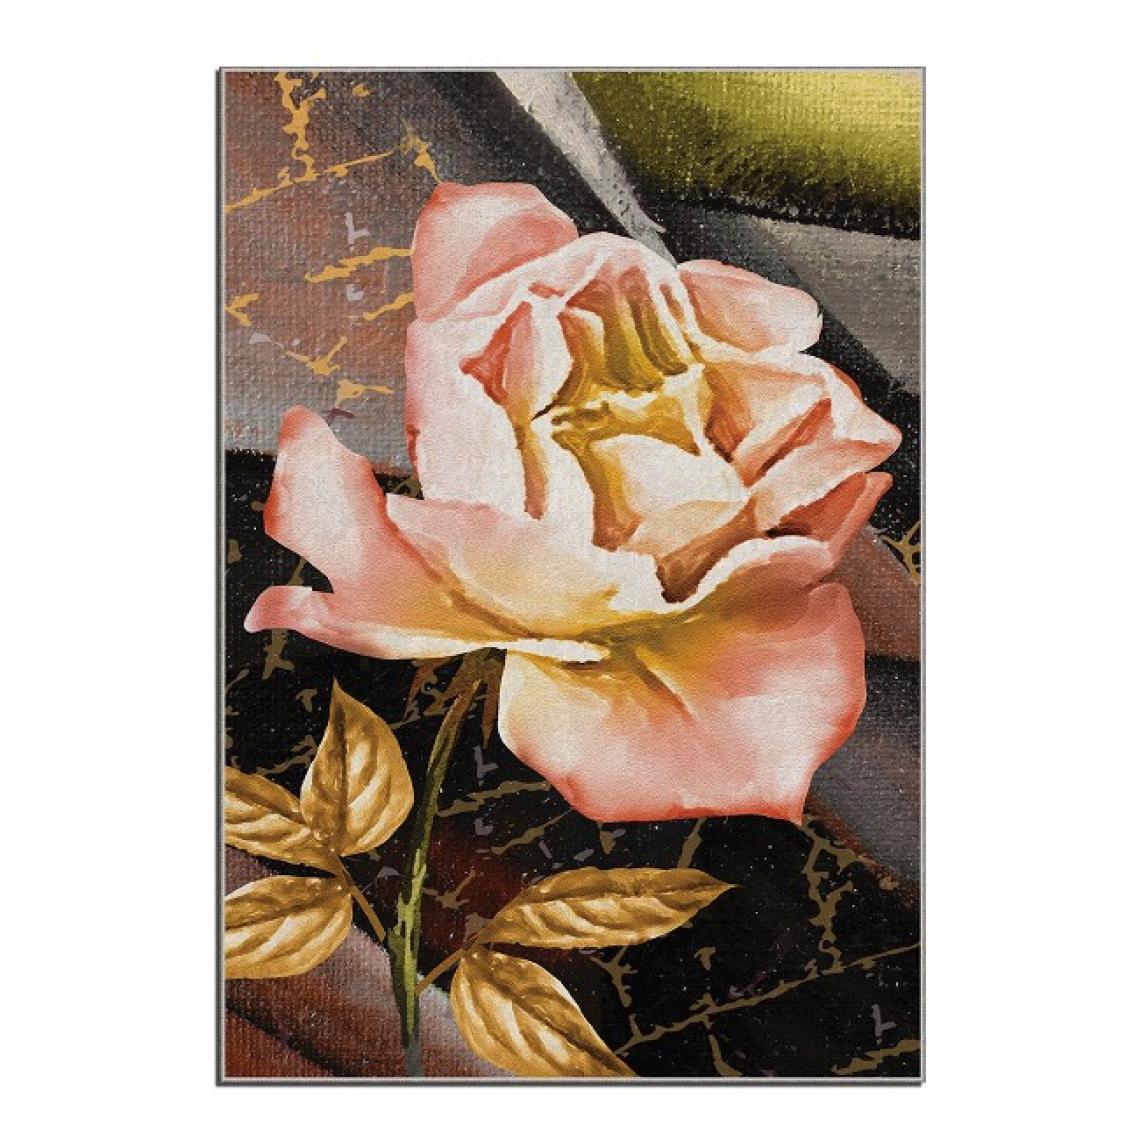 Homemania - HOMEMANIA Tapis décoratif Rose - Noir, Or, Rose - 120 x 180 cm - Tapis